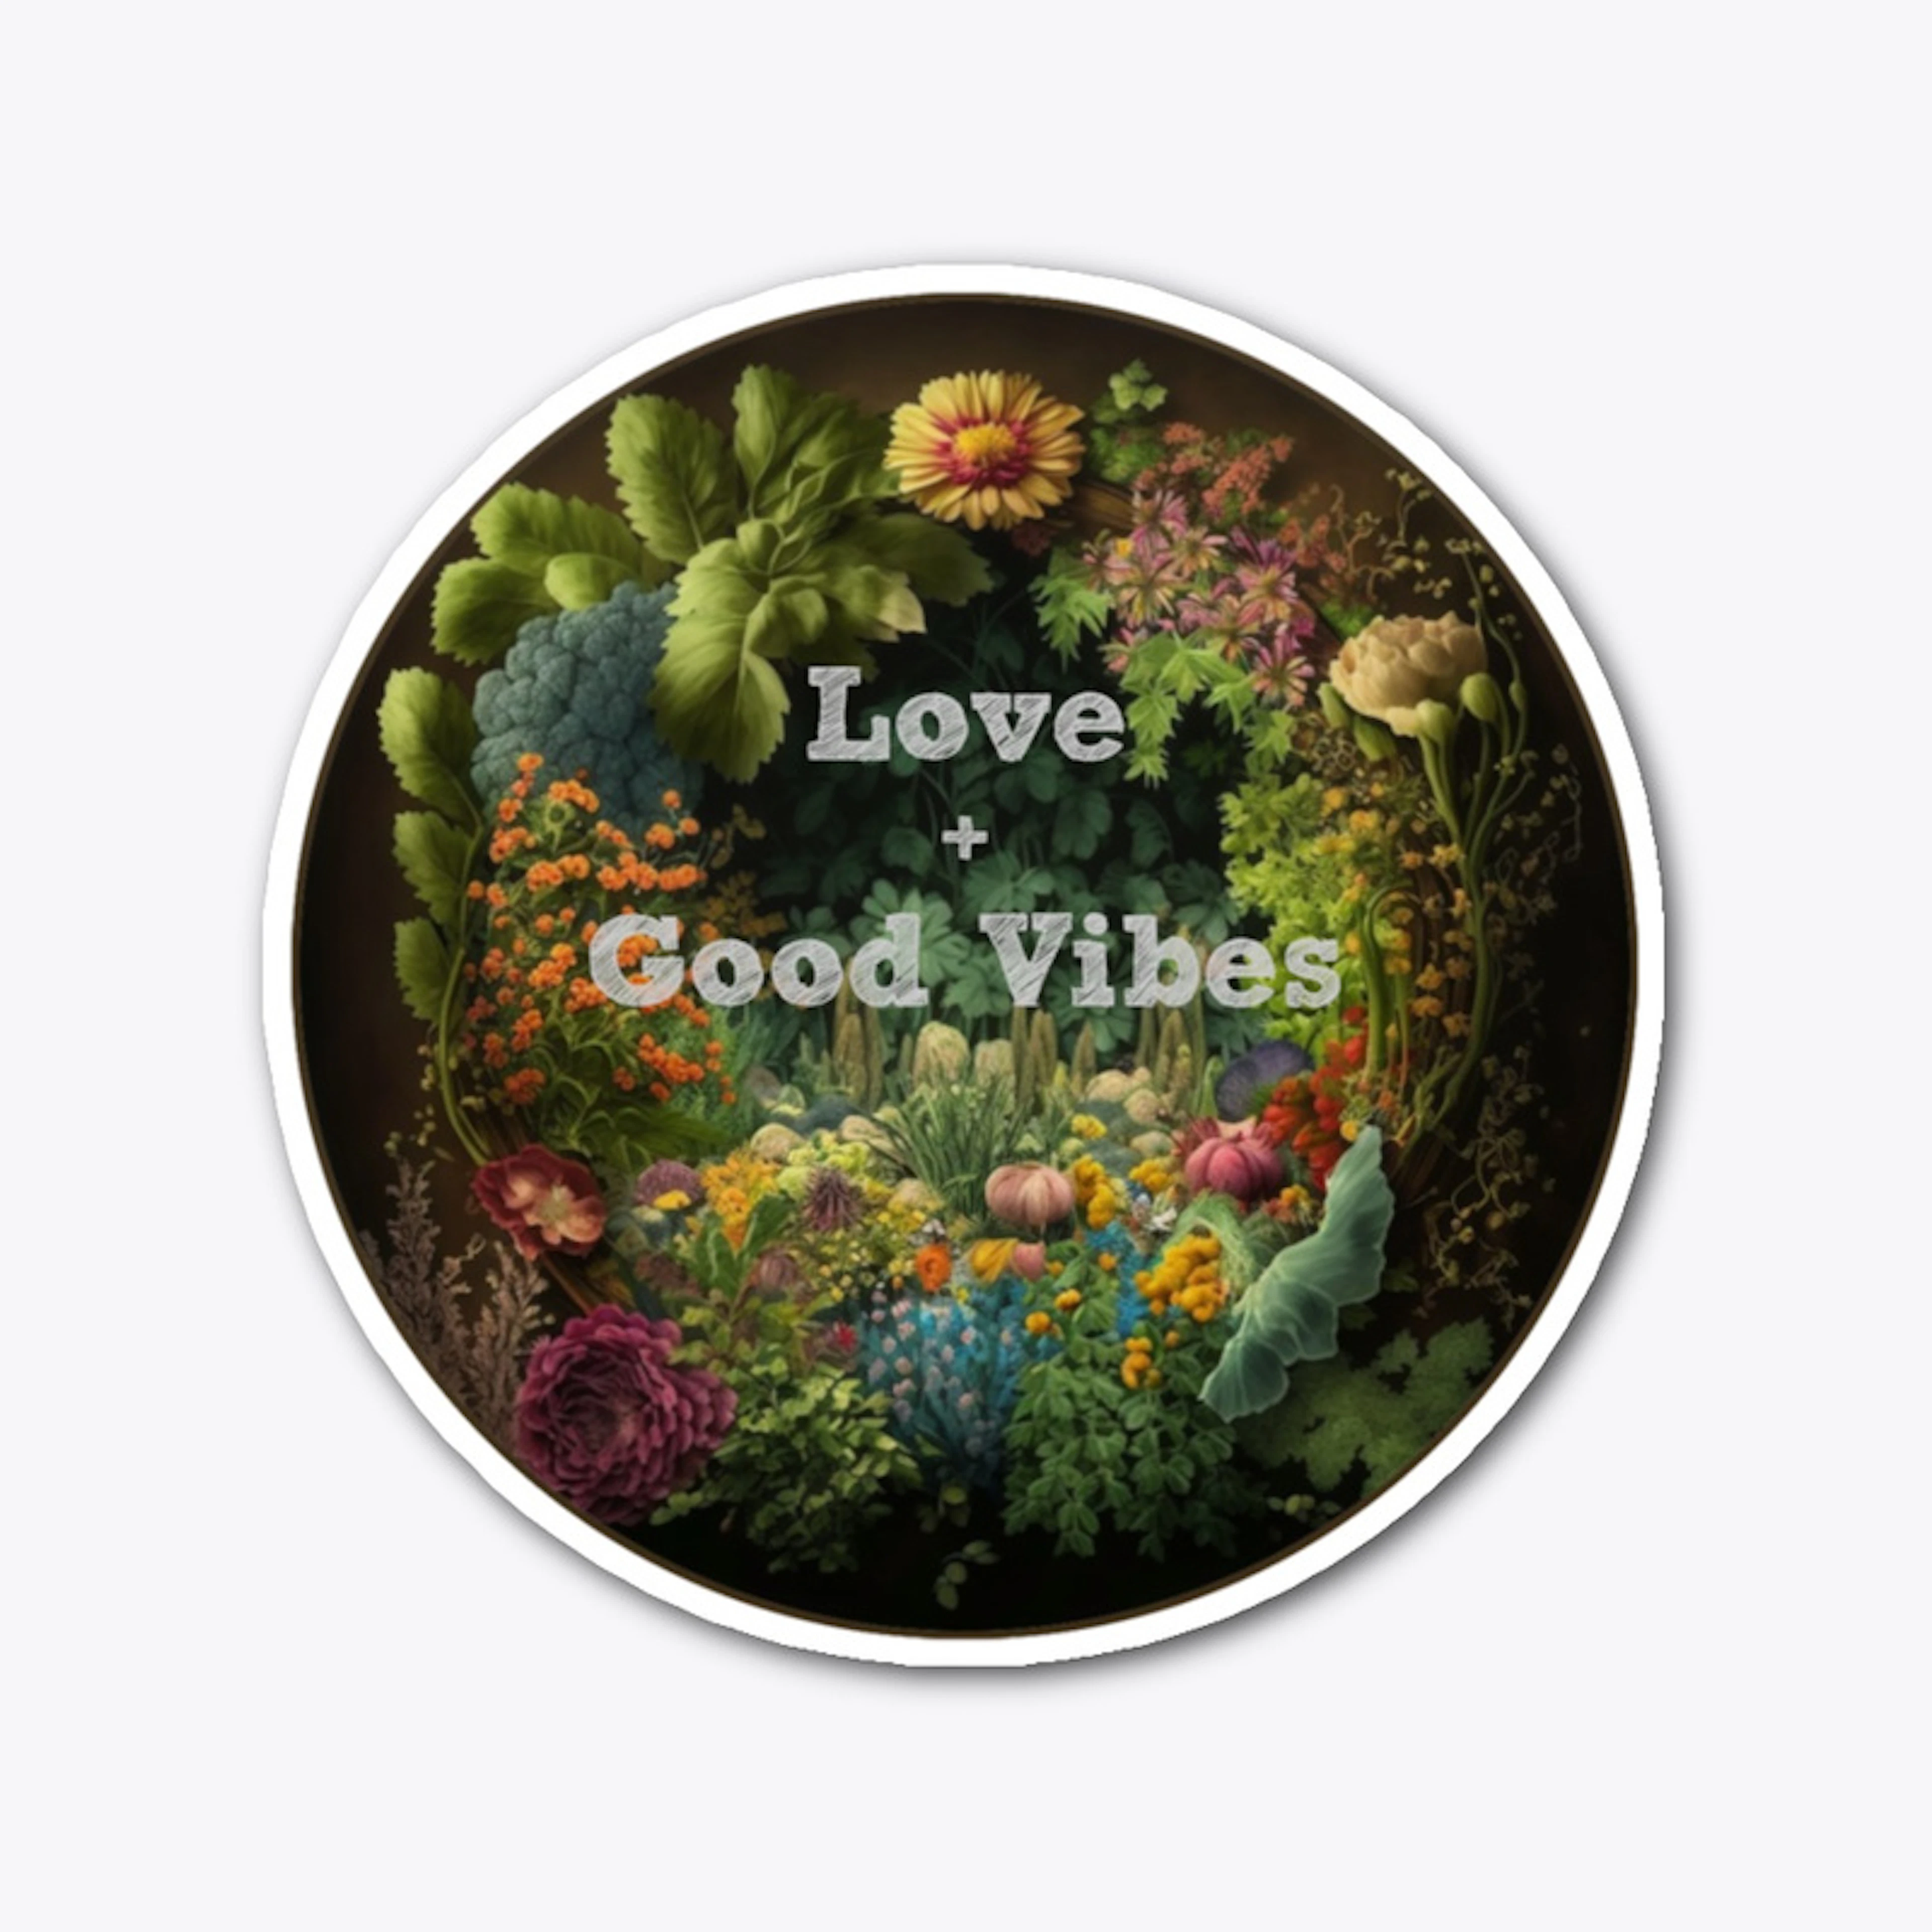 Love + Good Vibes